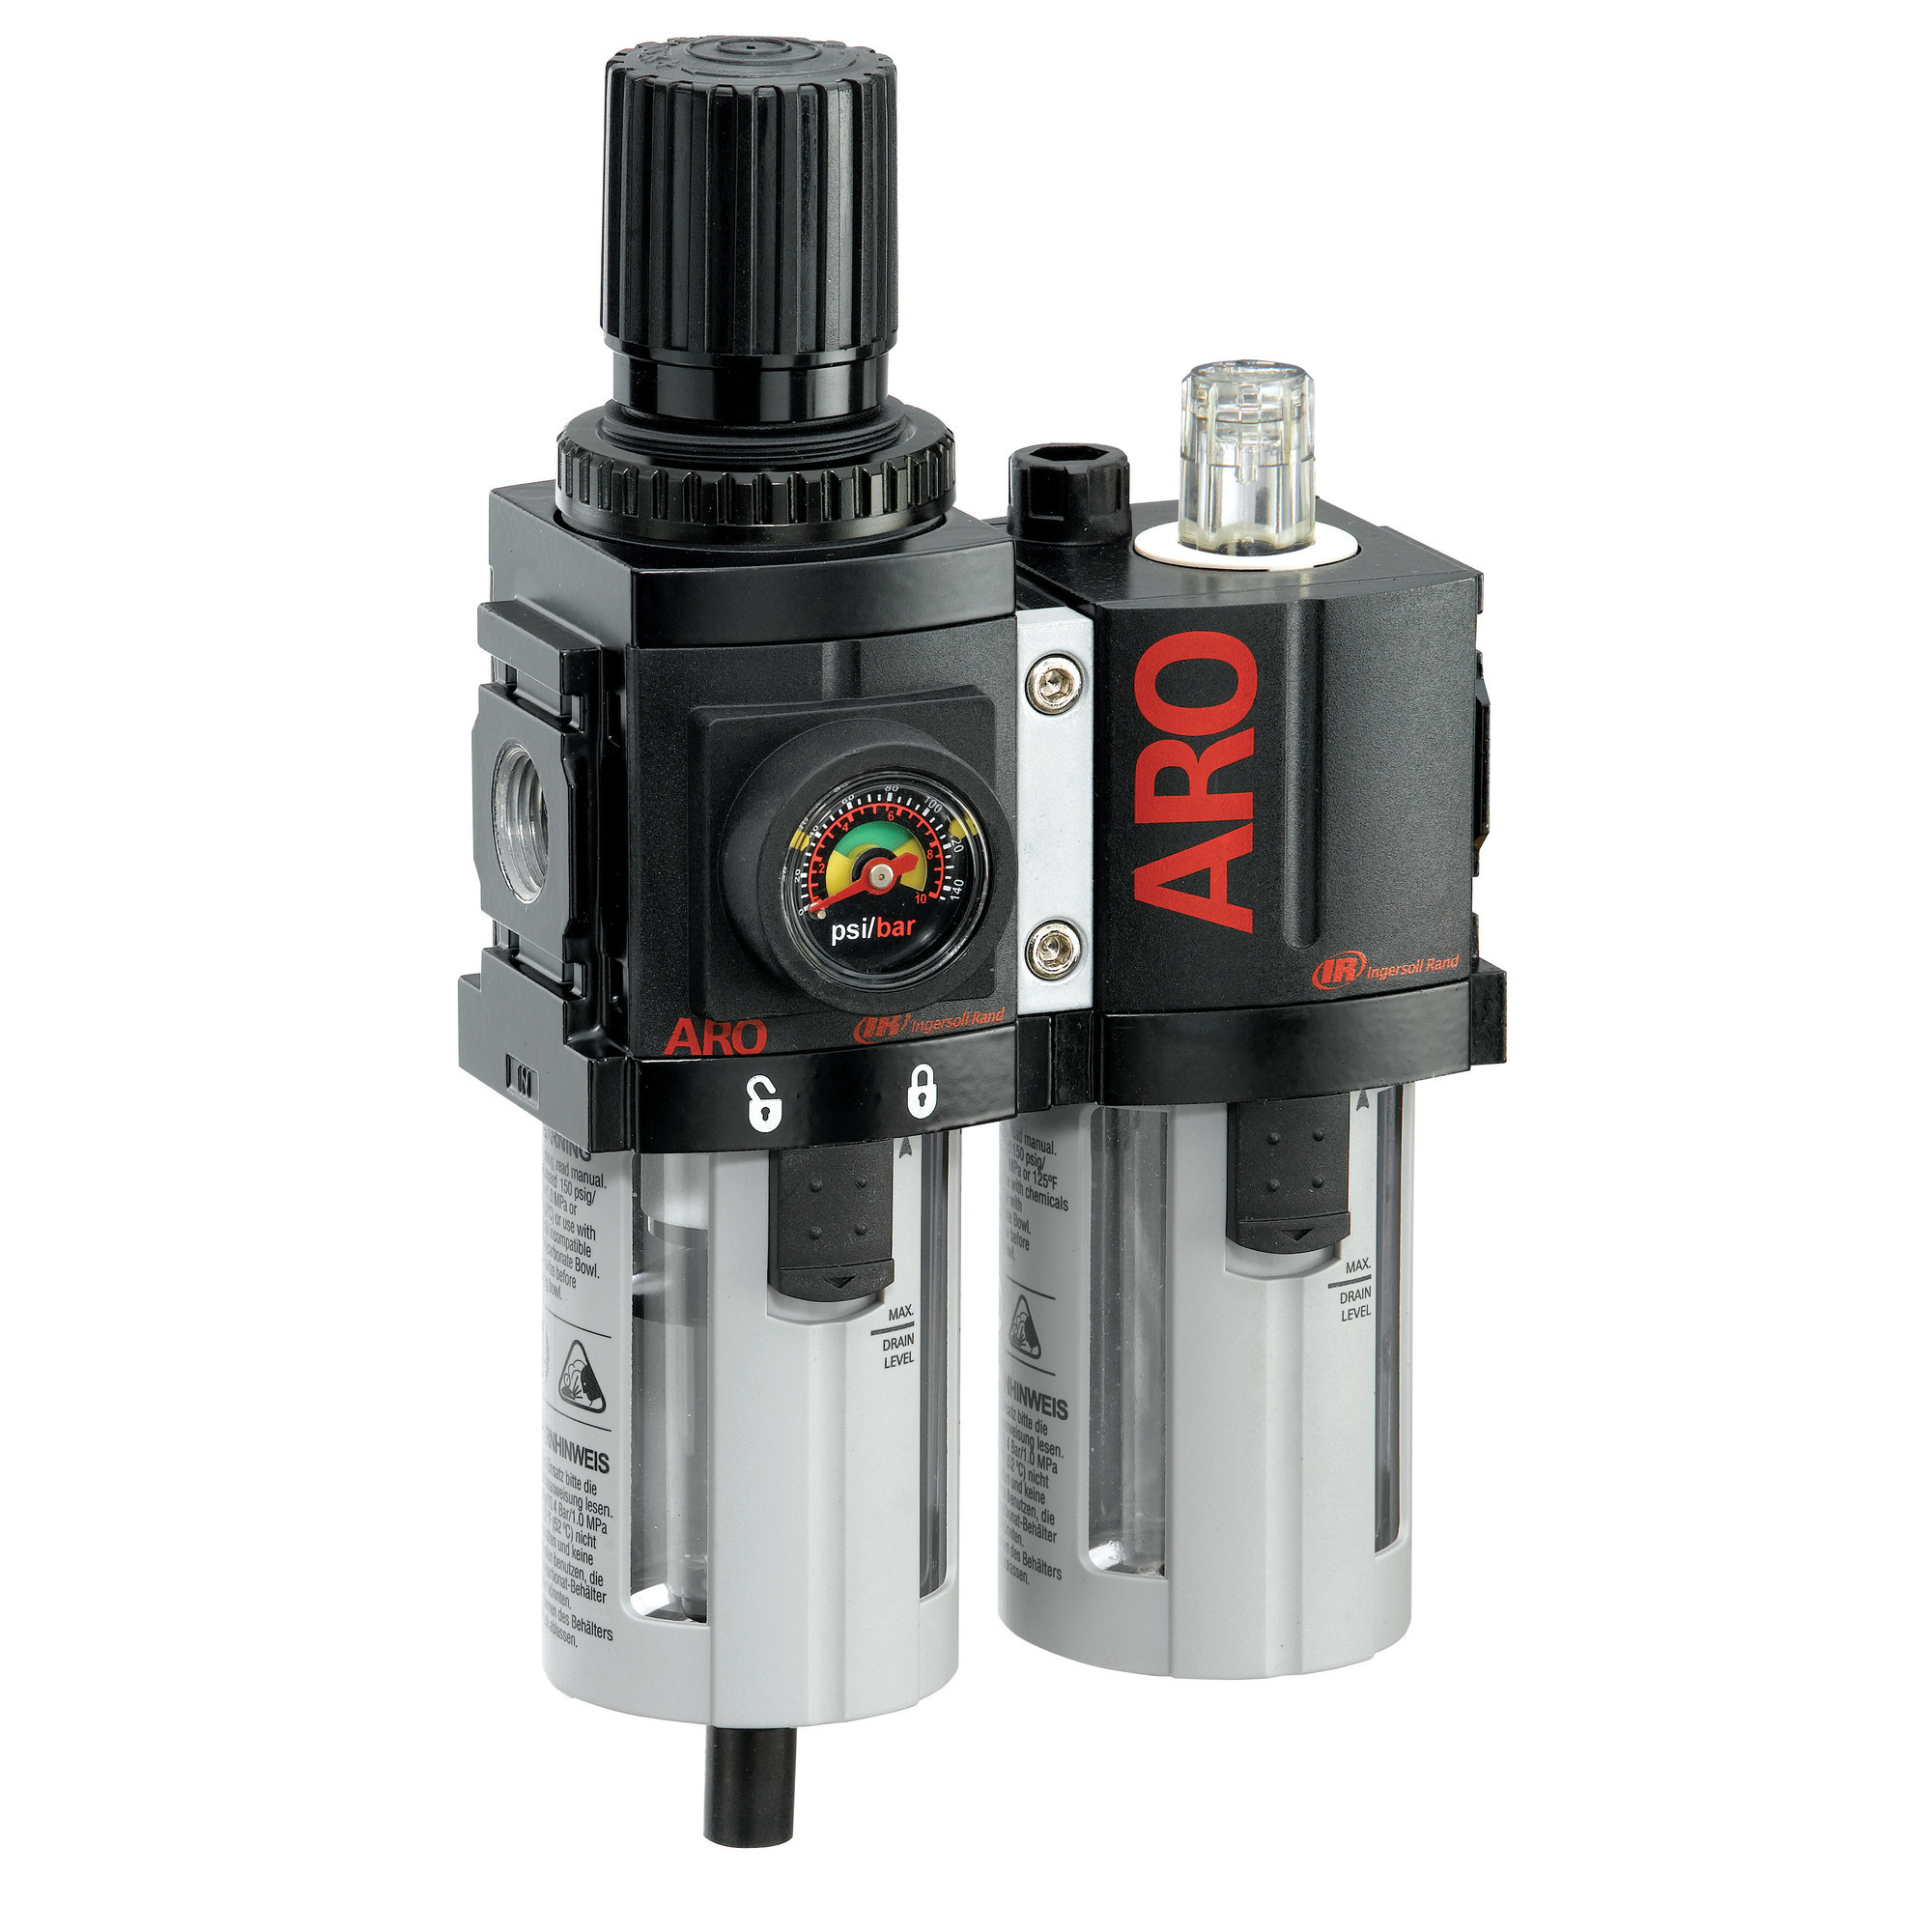 Ingersoll Rand ARO Combination Air System Accessories, 3/8Inch, Filter, Regulator, Lubricator, 71 CFM, Model C38231600VS